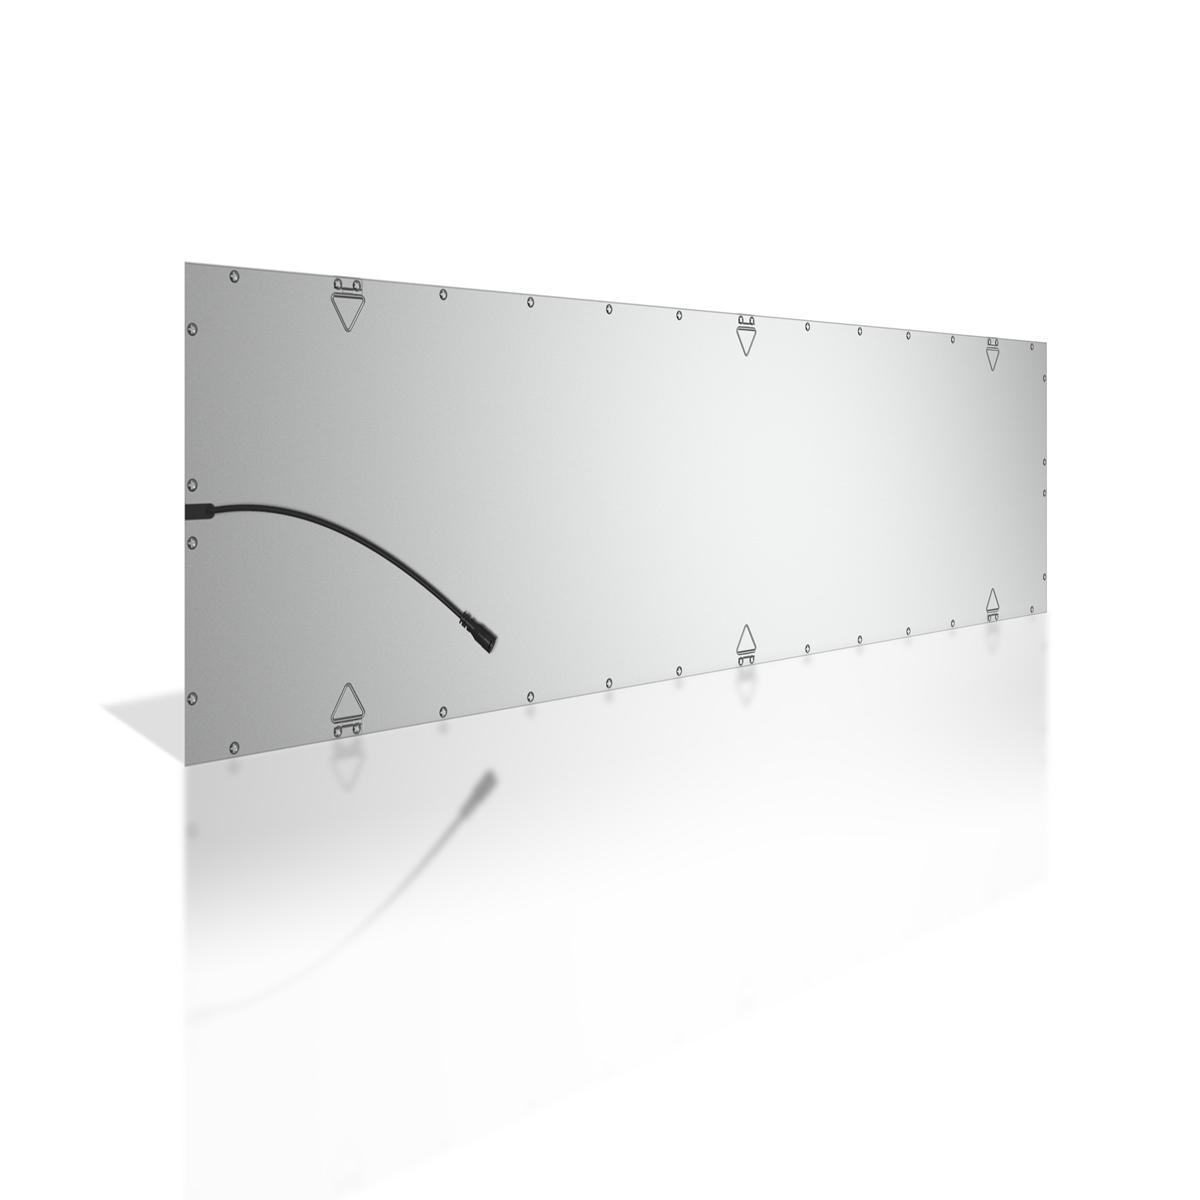 RGB+CCT LED Panel 120x30cm inkl. MiBoxer Smarthomesteuerung 48W 24V Rahmen weiß - Panelmontage:  Seilabhängung 1 Meter